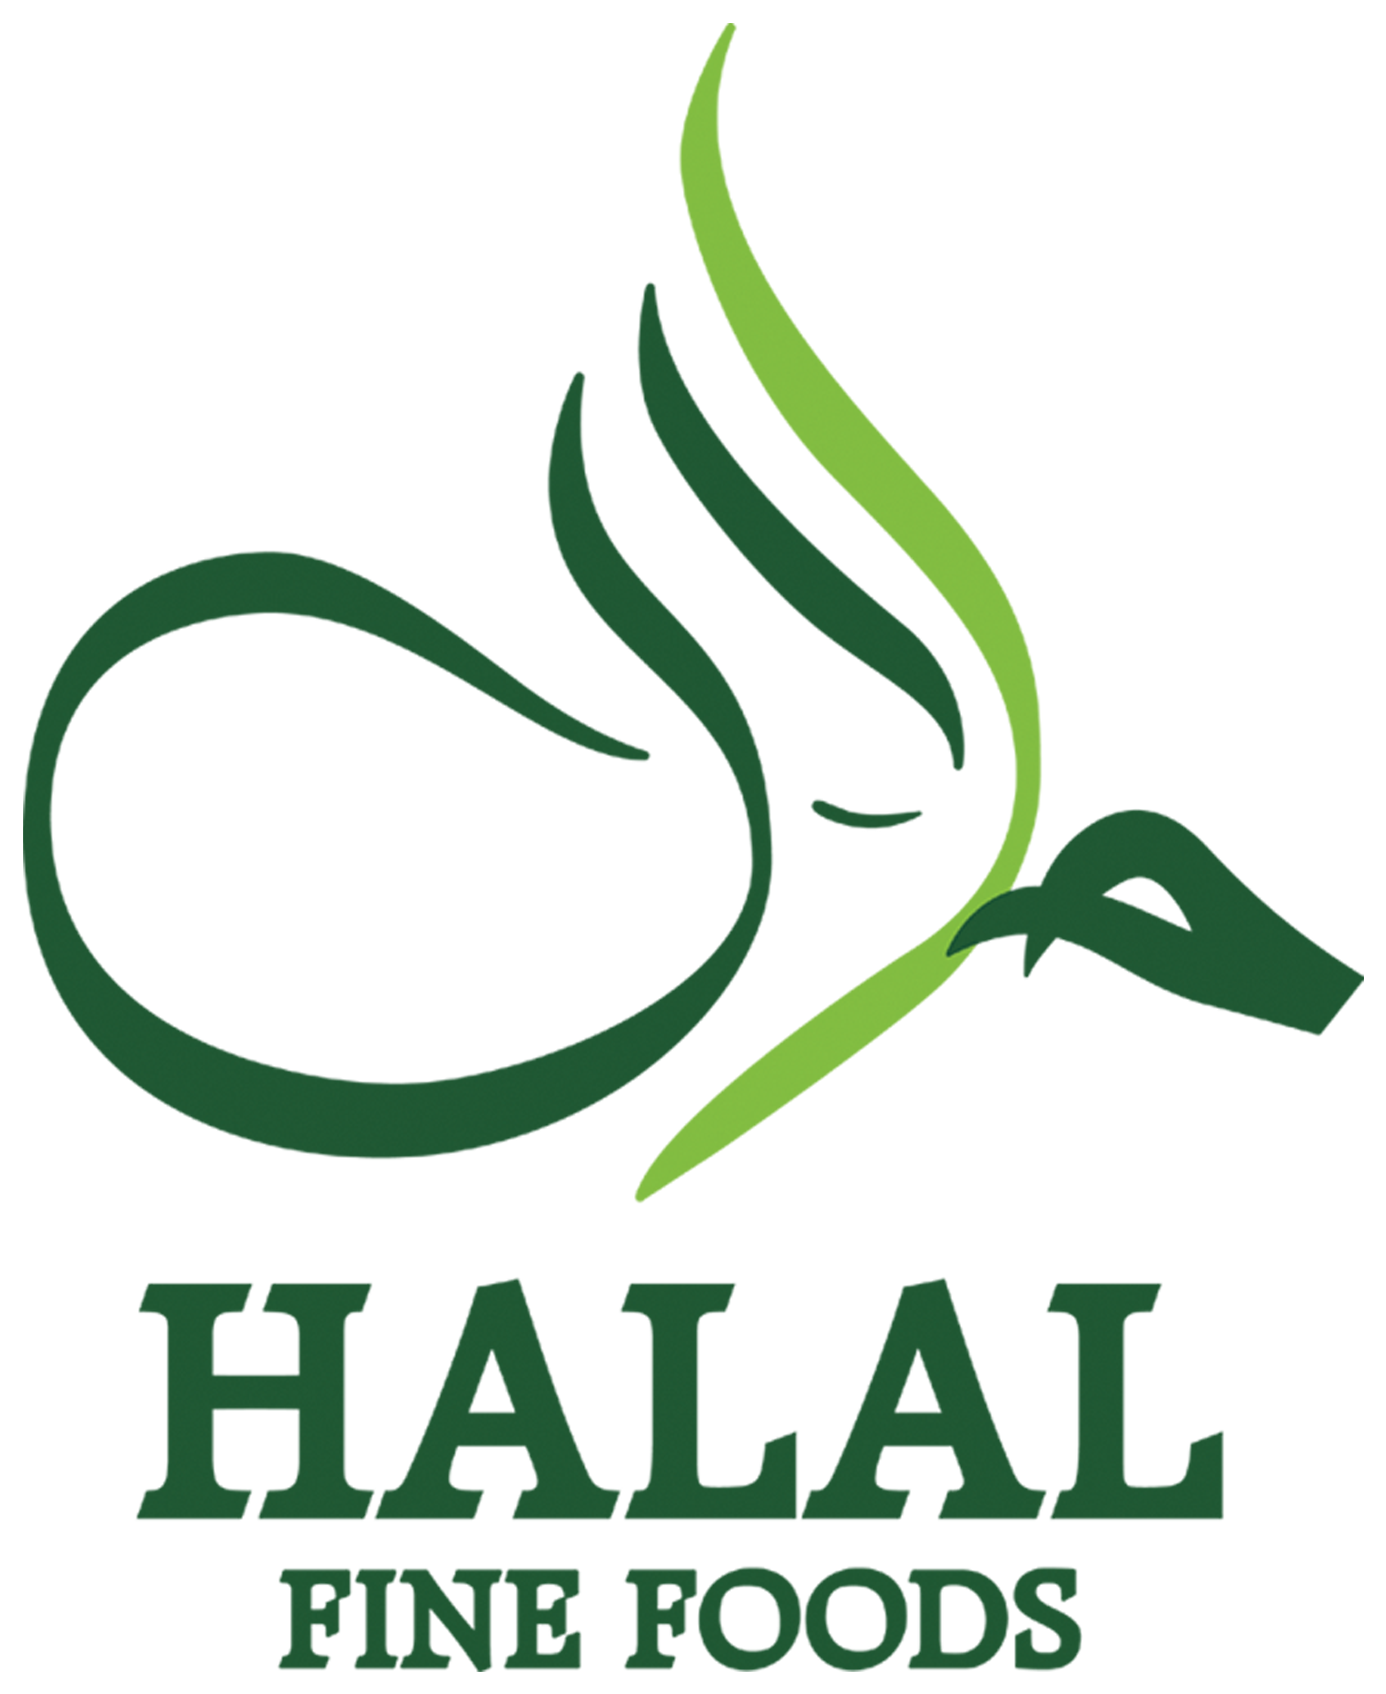 Халяль фуд. Эмблема Халяль. Халяль надпись. Halal логотип. Фирменный знак Халяль.